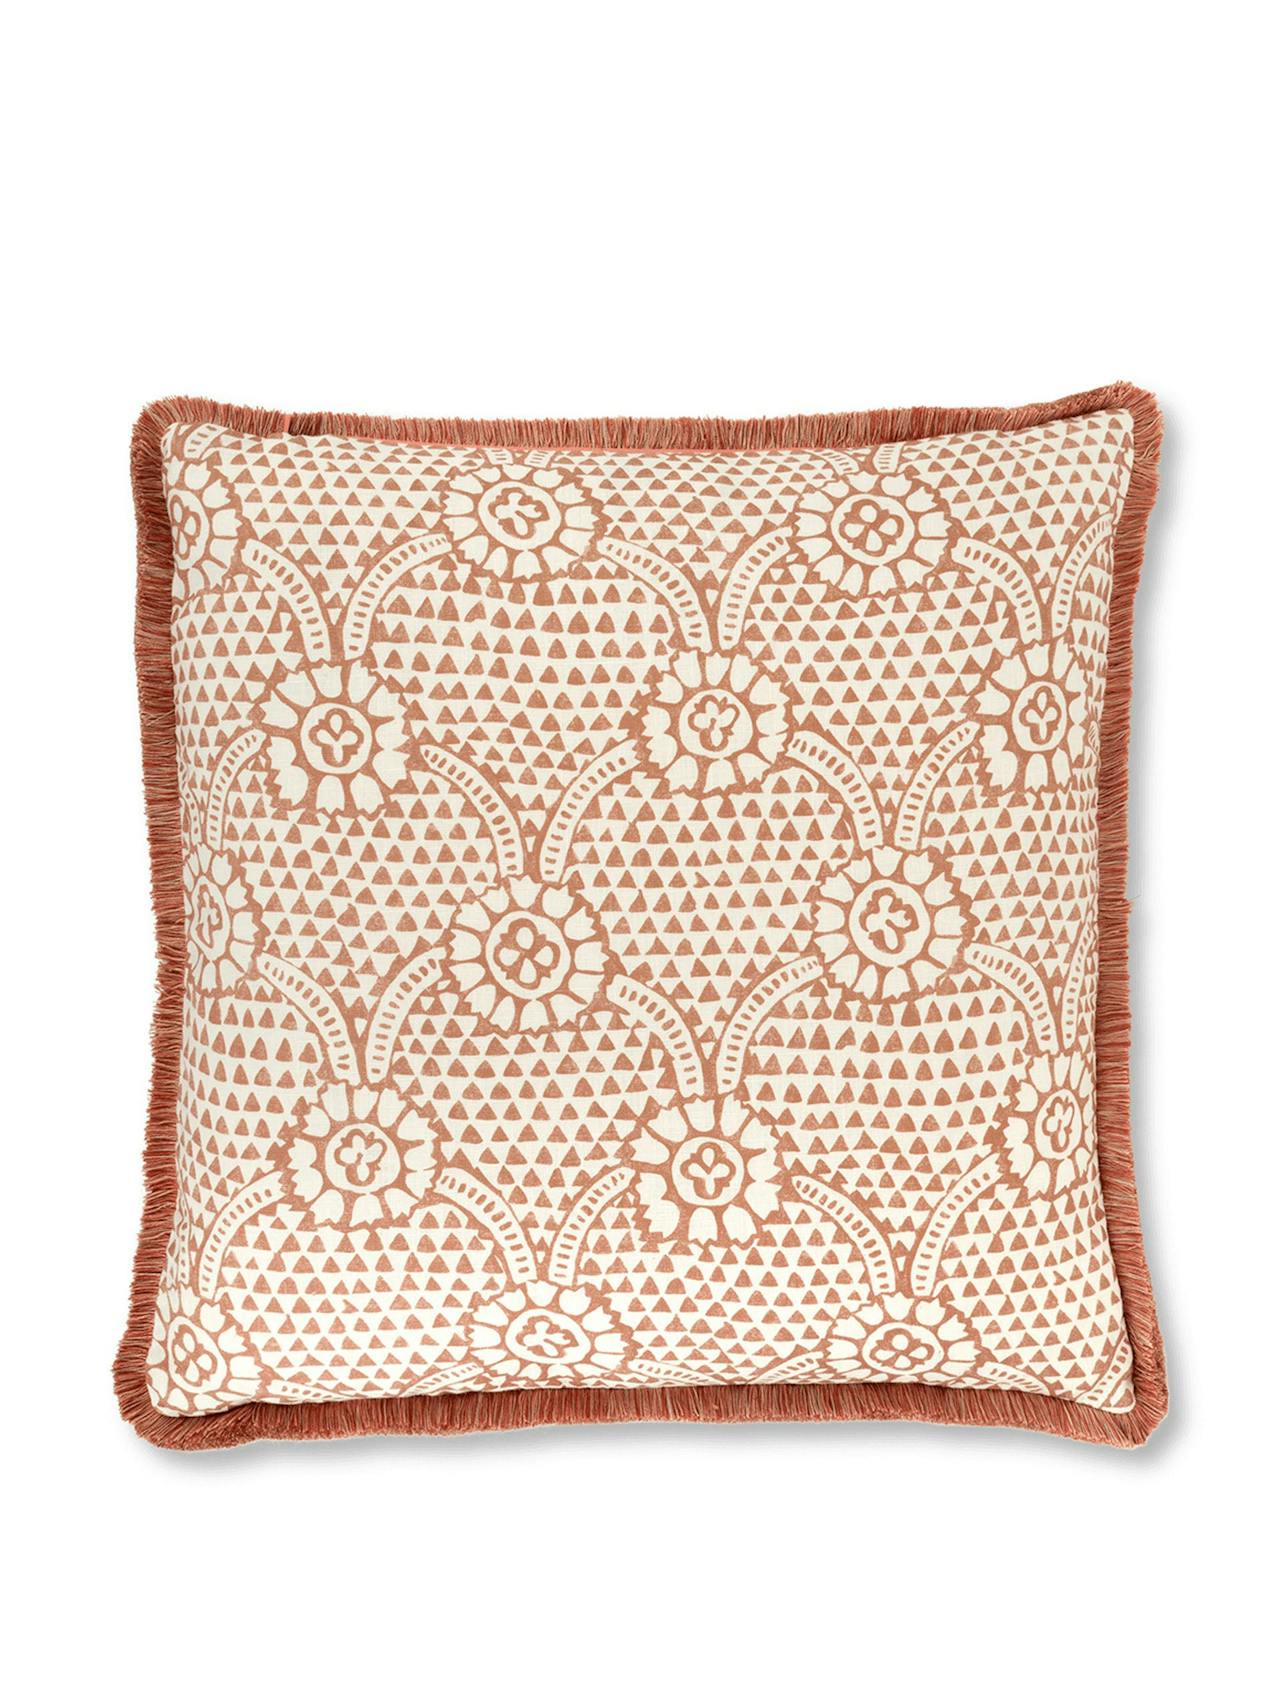 Terracotta Ivan print cushion with brushed fringe trim